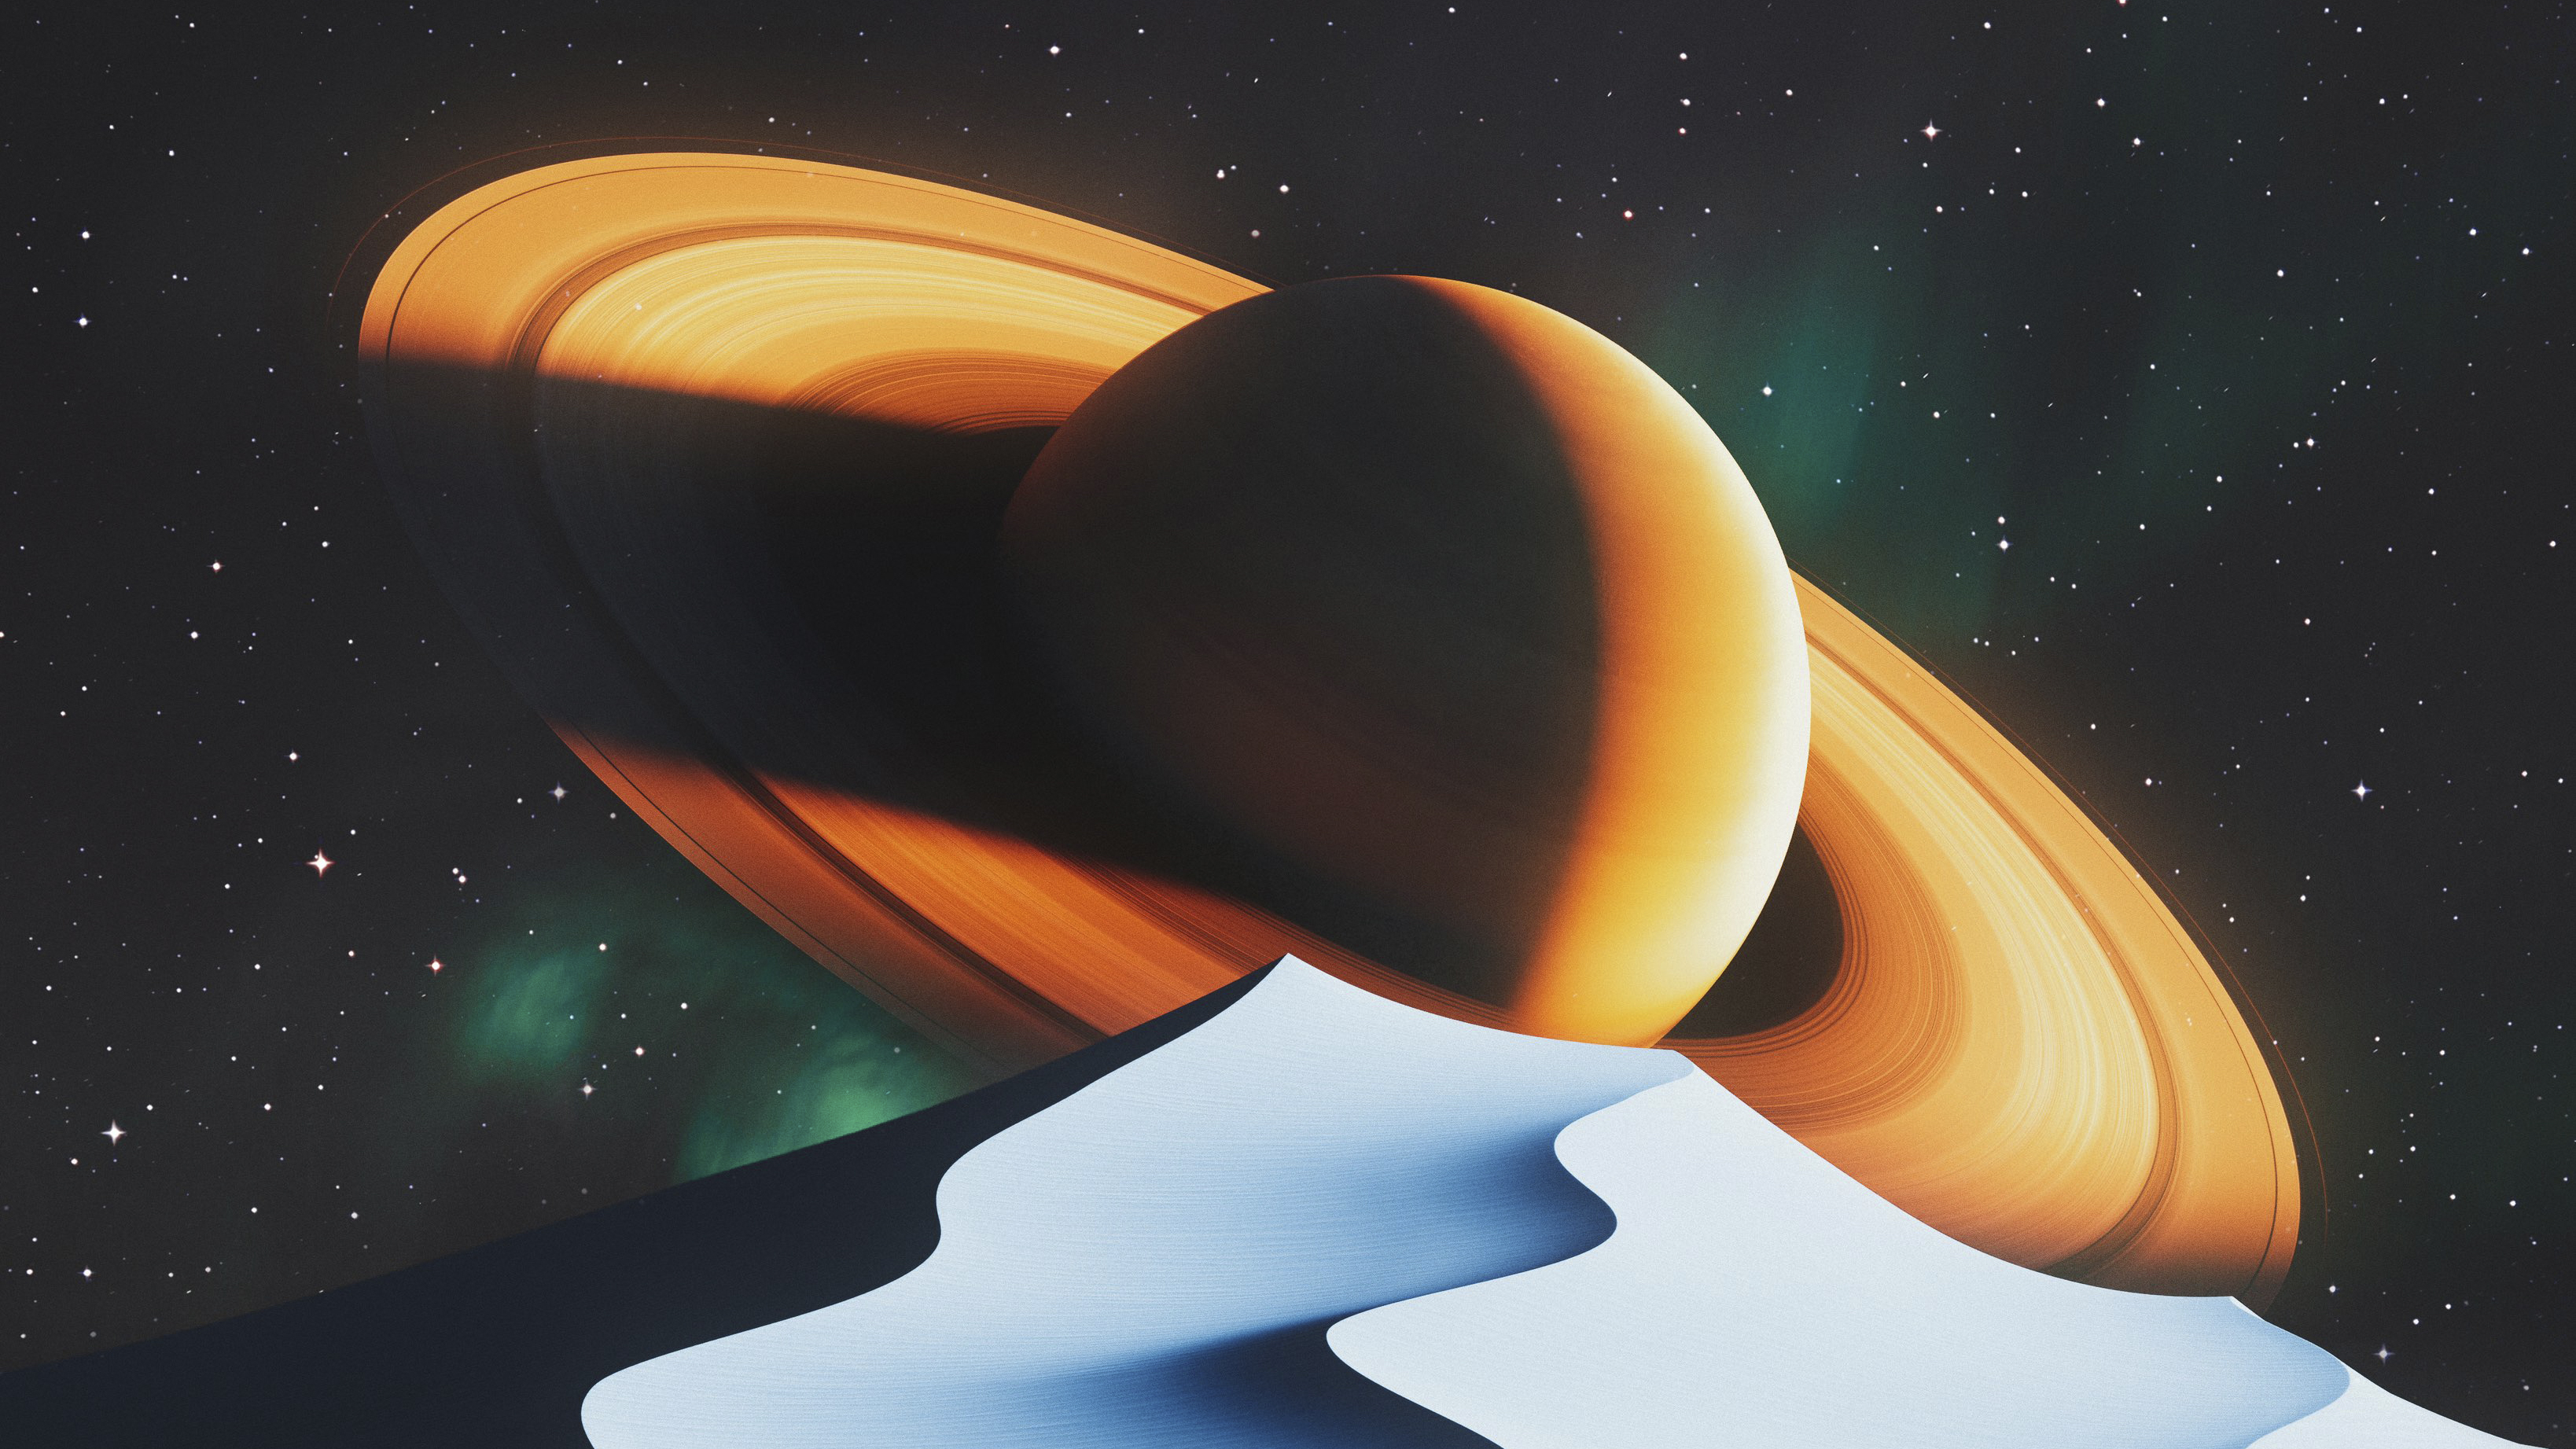 Digital Art Artwork Illustration Nature Landscape Desert Dunes Planet Saturn Start Night Sky Sand Ab 3276x1843